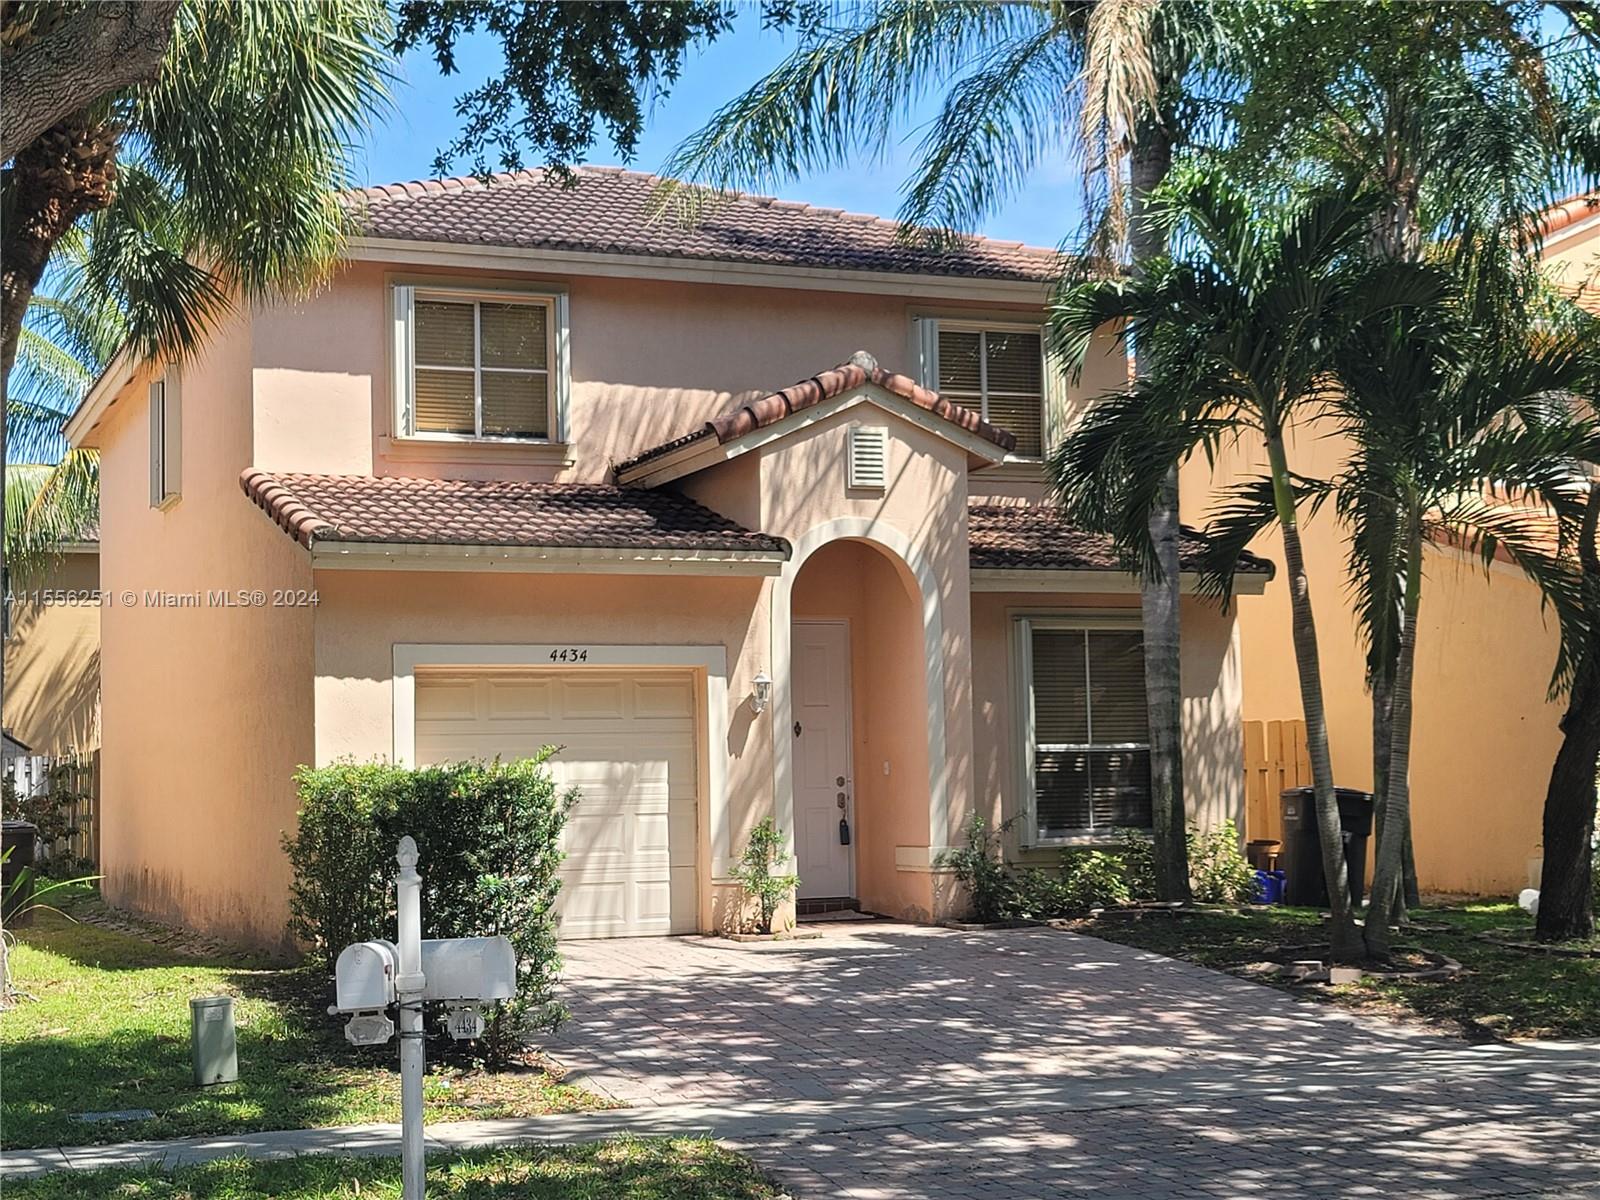 Rental Property at 4434 Lake Lucerne Cir Cir, West Palm Beach, Palm Beach County, Florida - Bedrooms: 4 
Bathrooms: 3  - $3,300 MO.